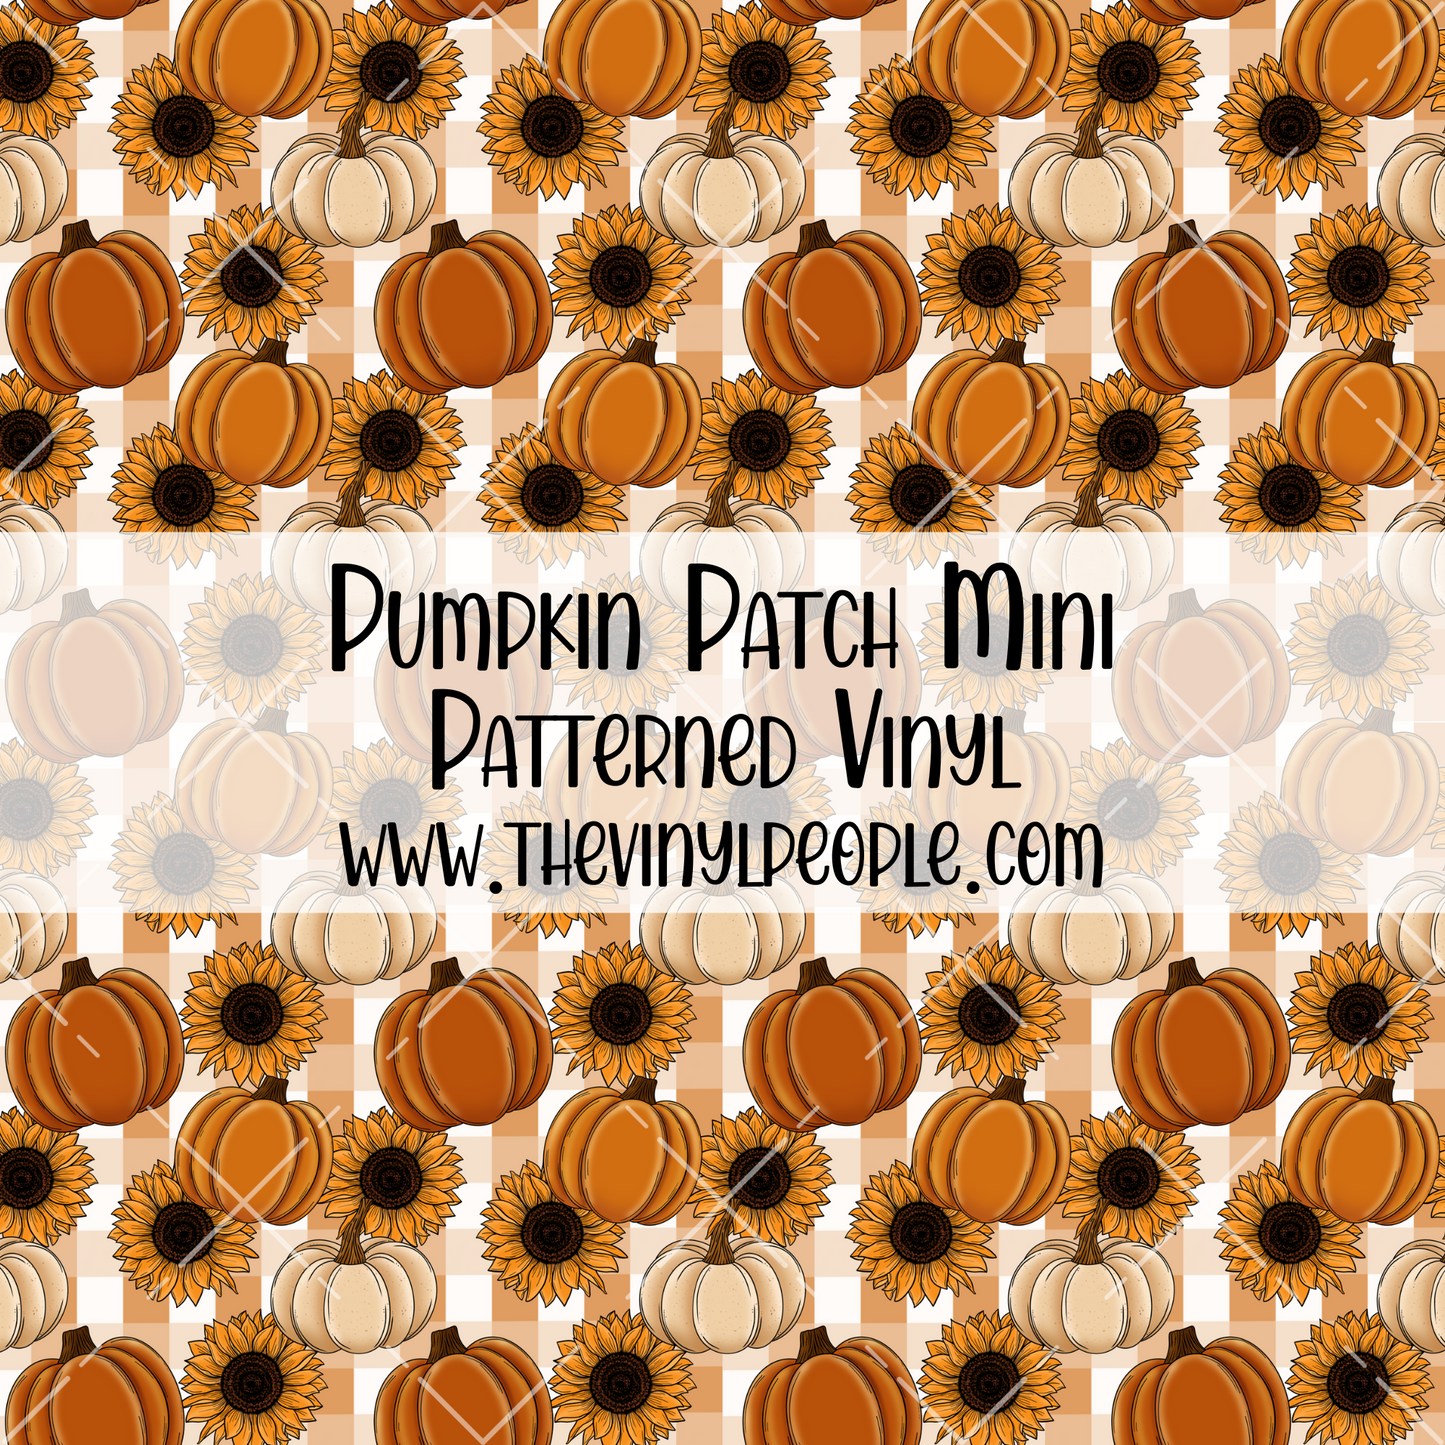 Pumpkin Patch Patterned Vinyl